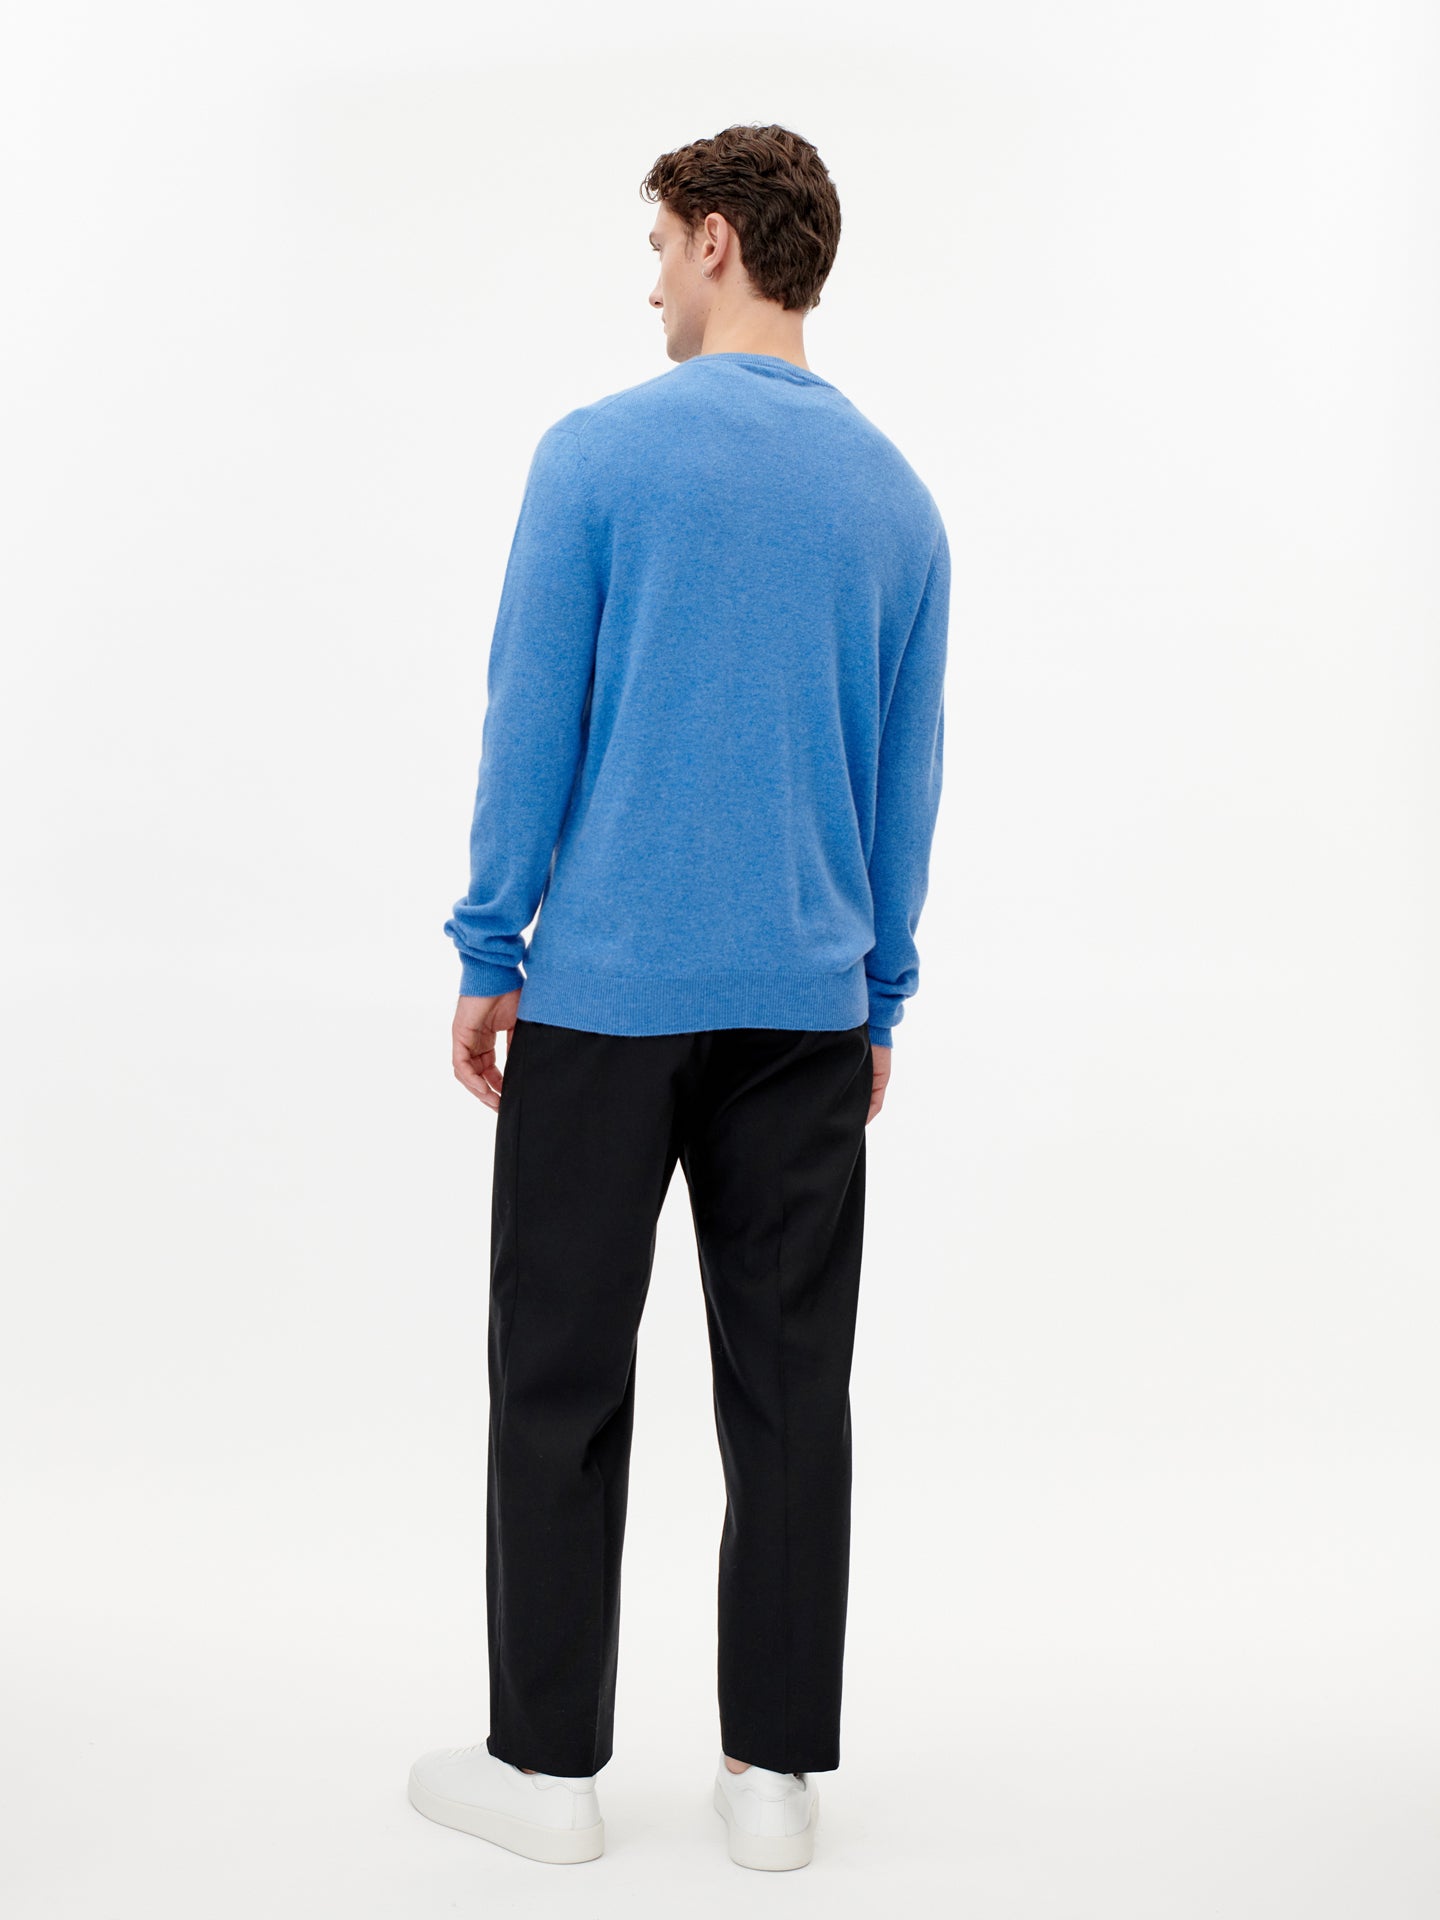 Men's Cashmere Basic V-Neck Sweater Blue - Gobi Cashmere